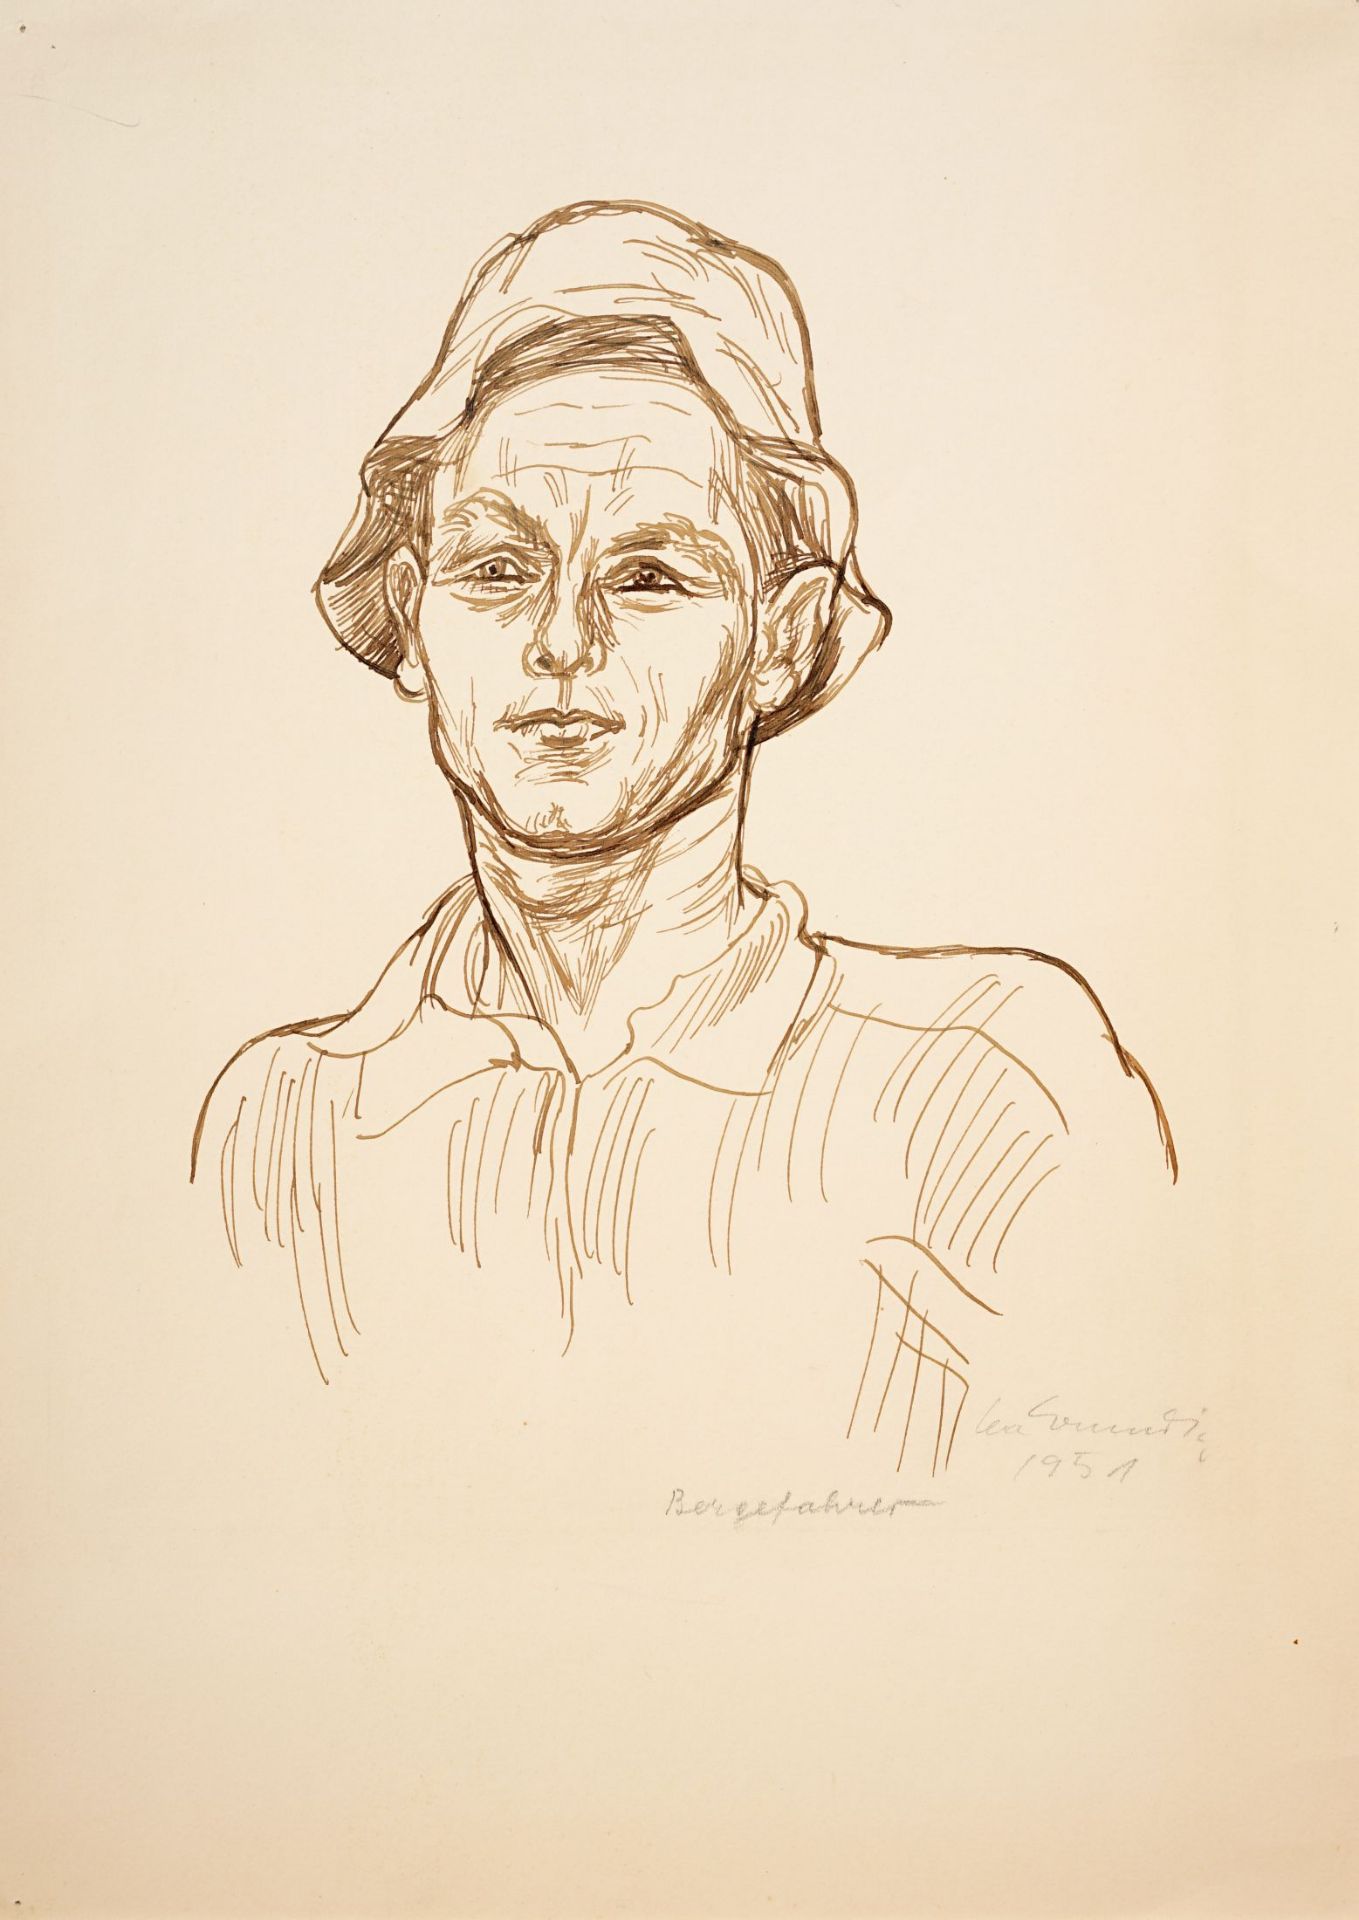 Lea Grundig "Bergefahrer". 1951.